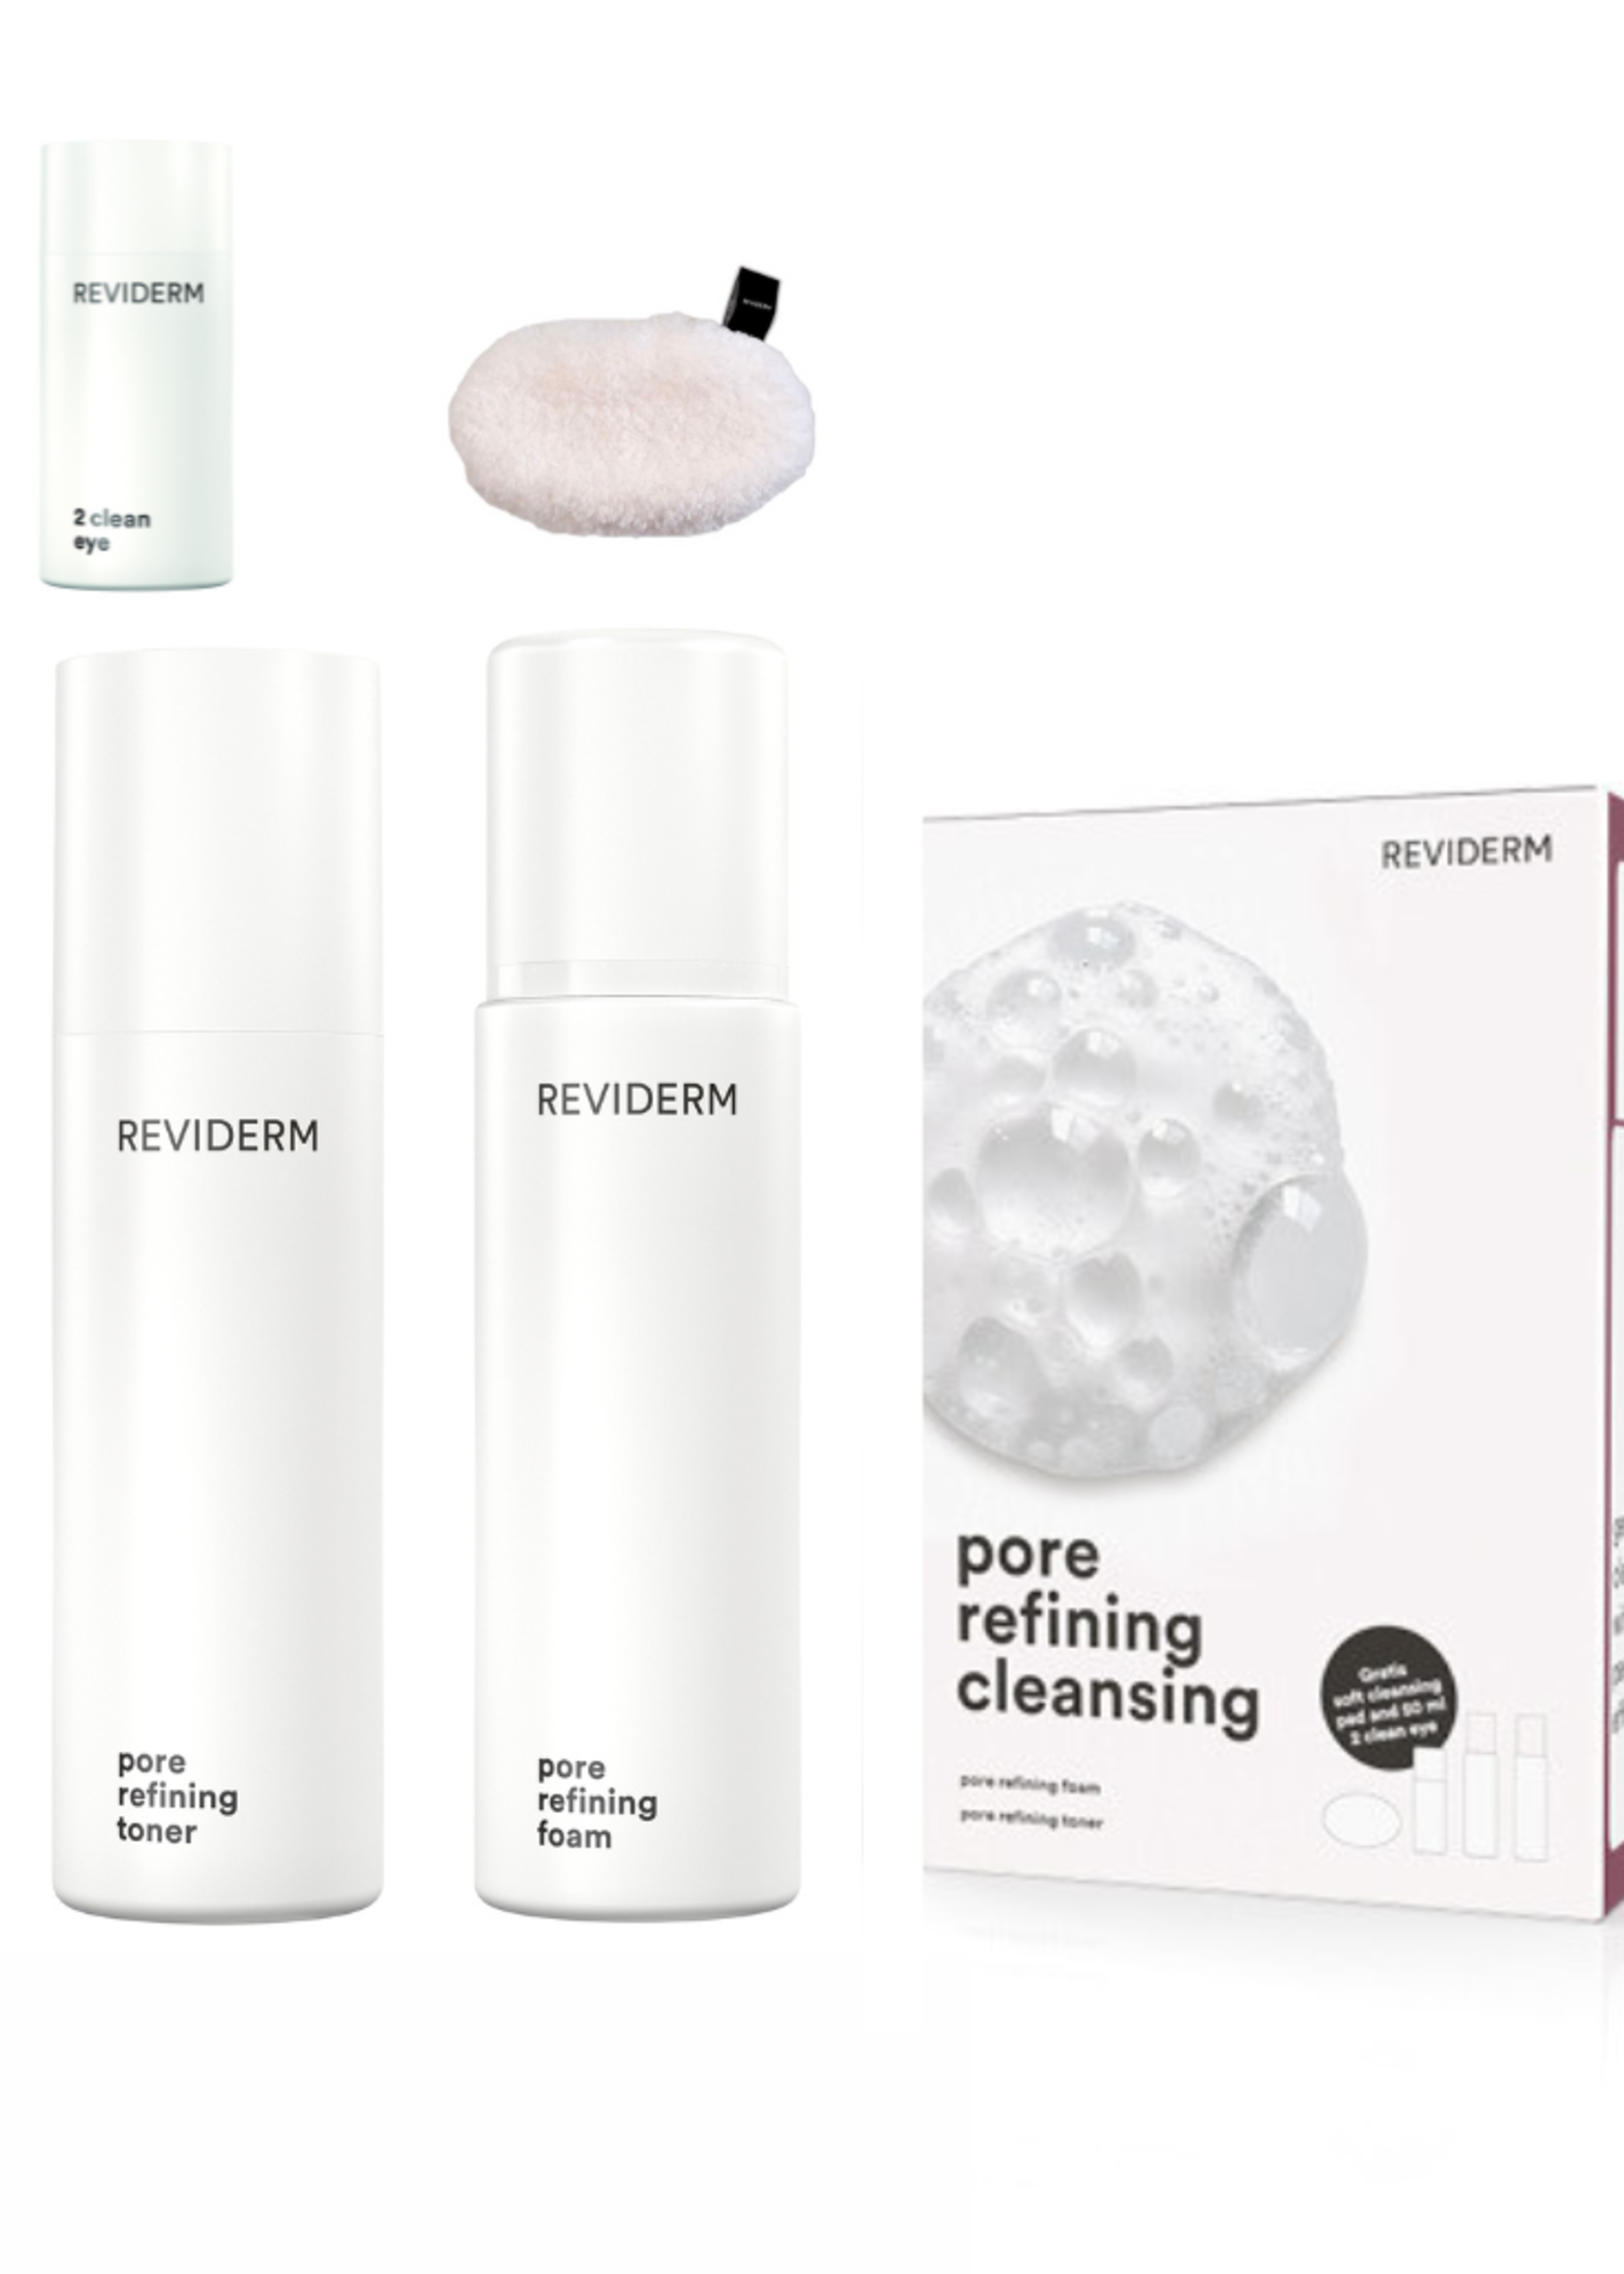 Reviderm Set : Reinigungs Duo - Reviderm  Pore Refining Foam 200 ml &  Pore Refining Toner 200 ml  +  Mini 2 Clean & Eye 50 ml +  Soft Cleansing Pad